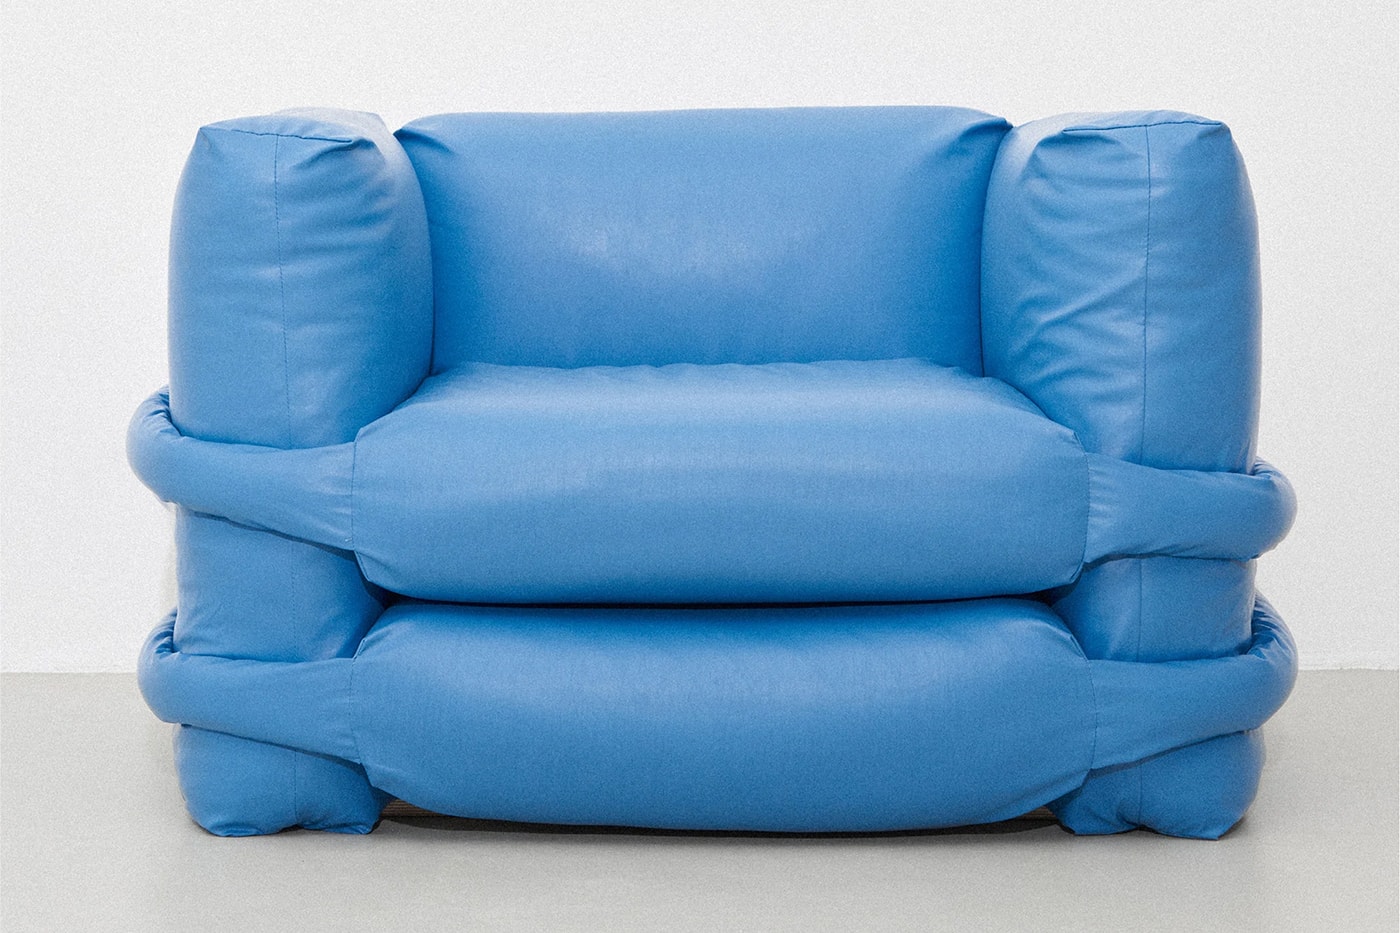 Muller Van Severen and Kassl Editions Drop Limited-Edition "Pillow" Sofa